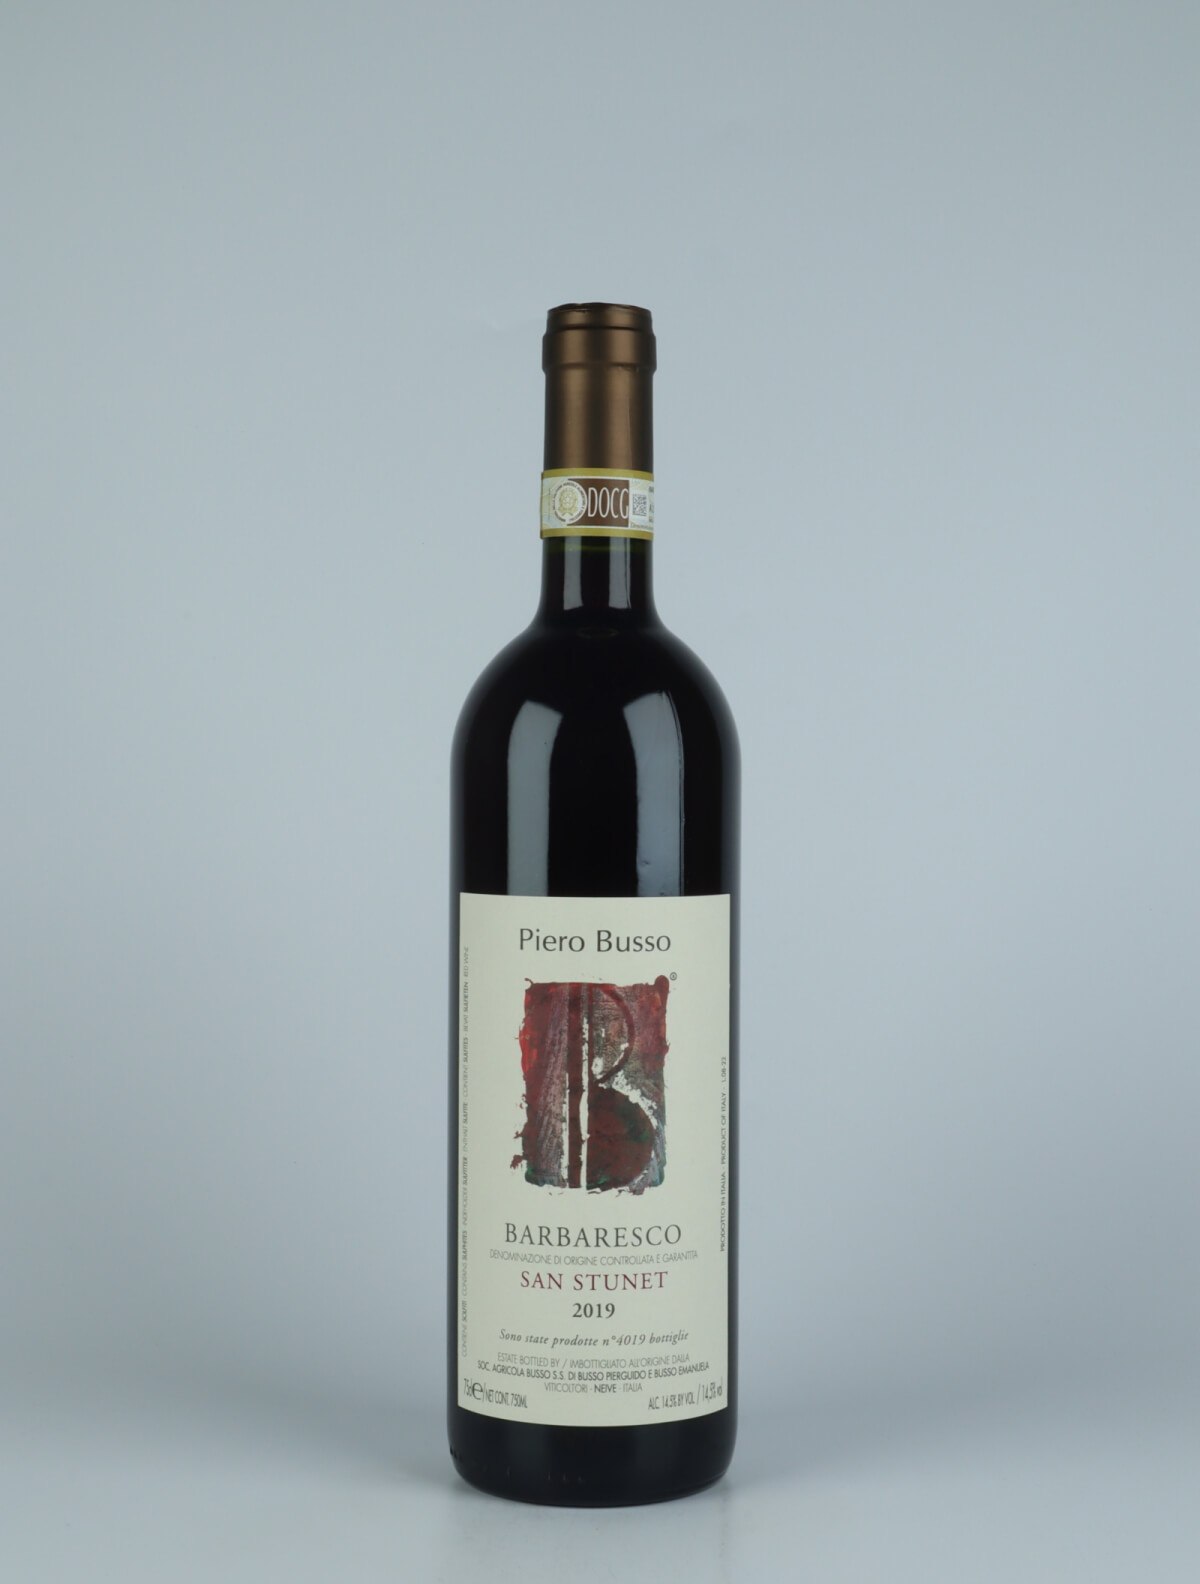 En flaske 2019 Barbaresco San Stunet Rødvin fra Piero Busso, Piemonte i Italien